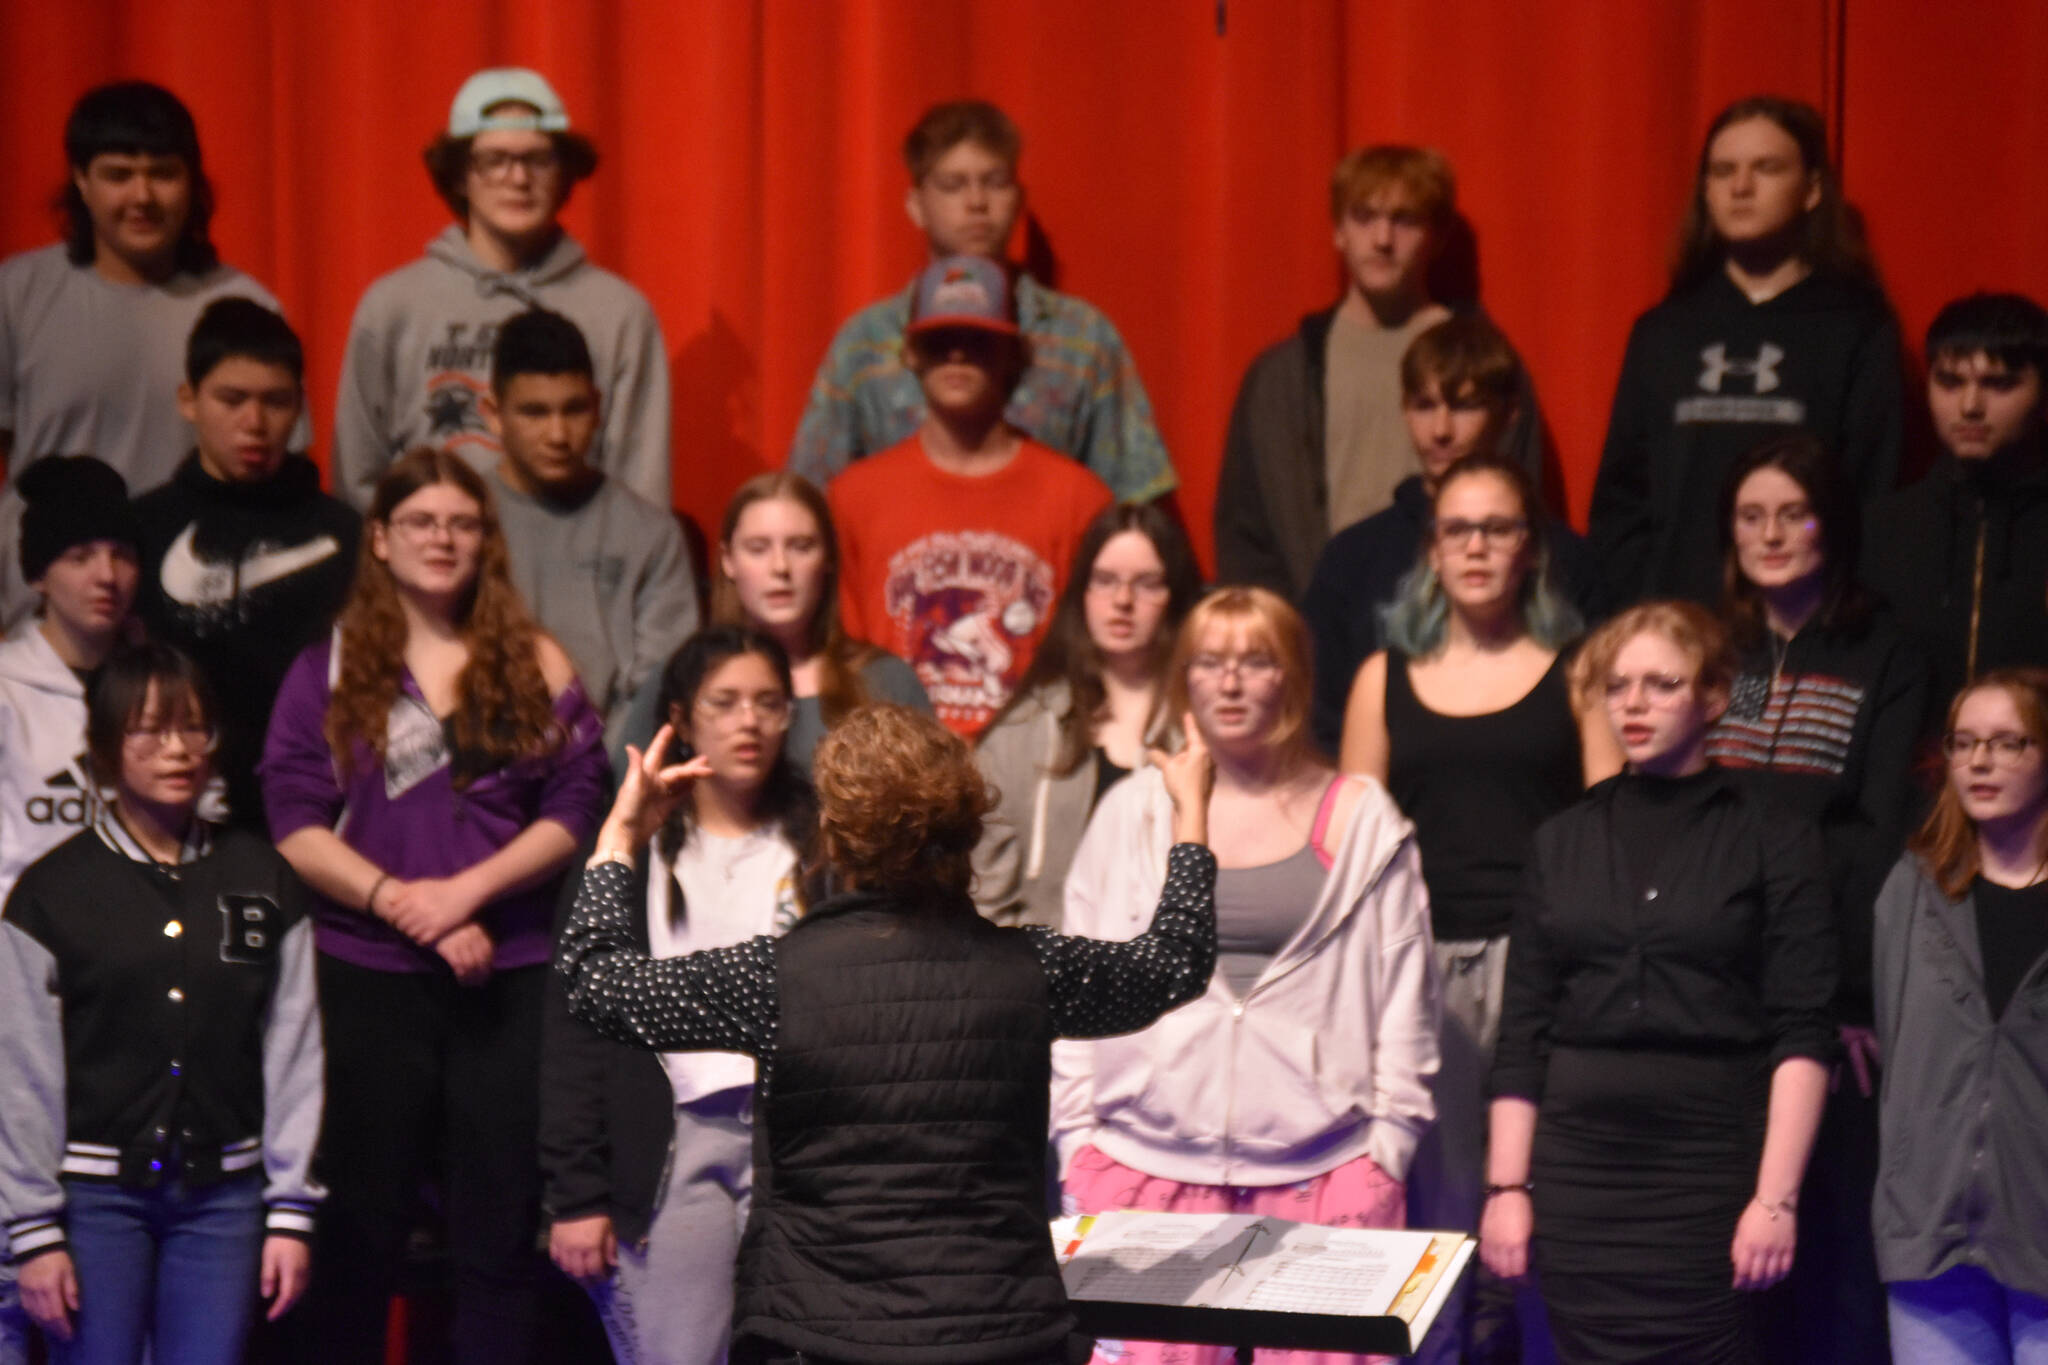 Audra Calloway directs the Soldotna High School Choir in a rehersal on Oct. 11, 2022, at Soldotna High School in Soldotna, Alaska. (Jake Dye/Peninsula Clarion)